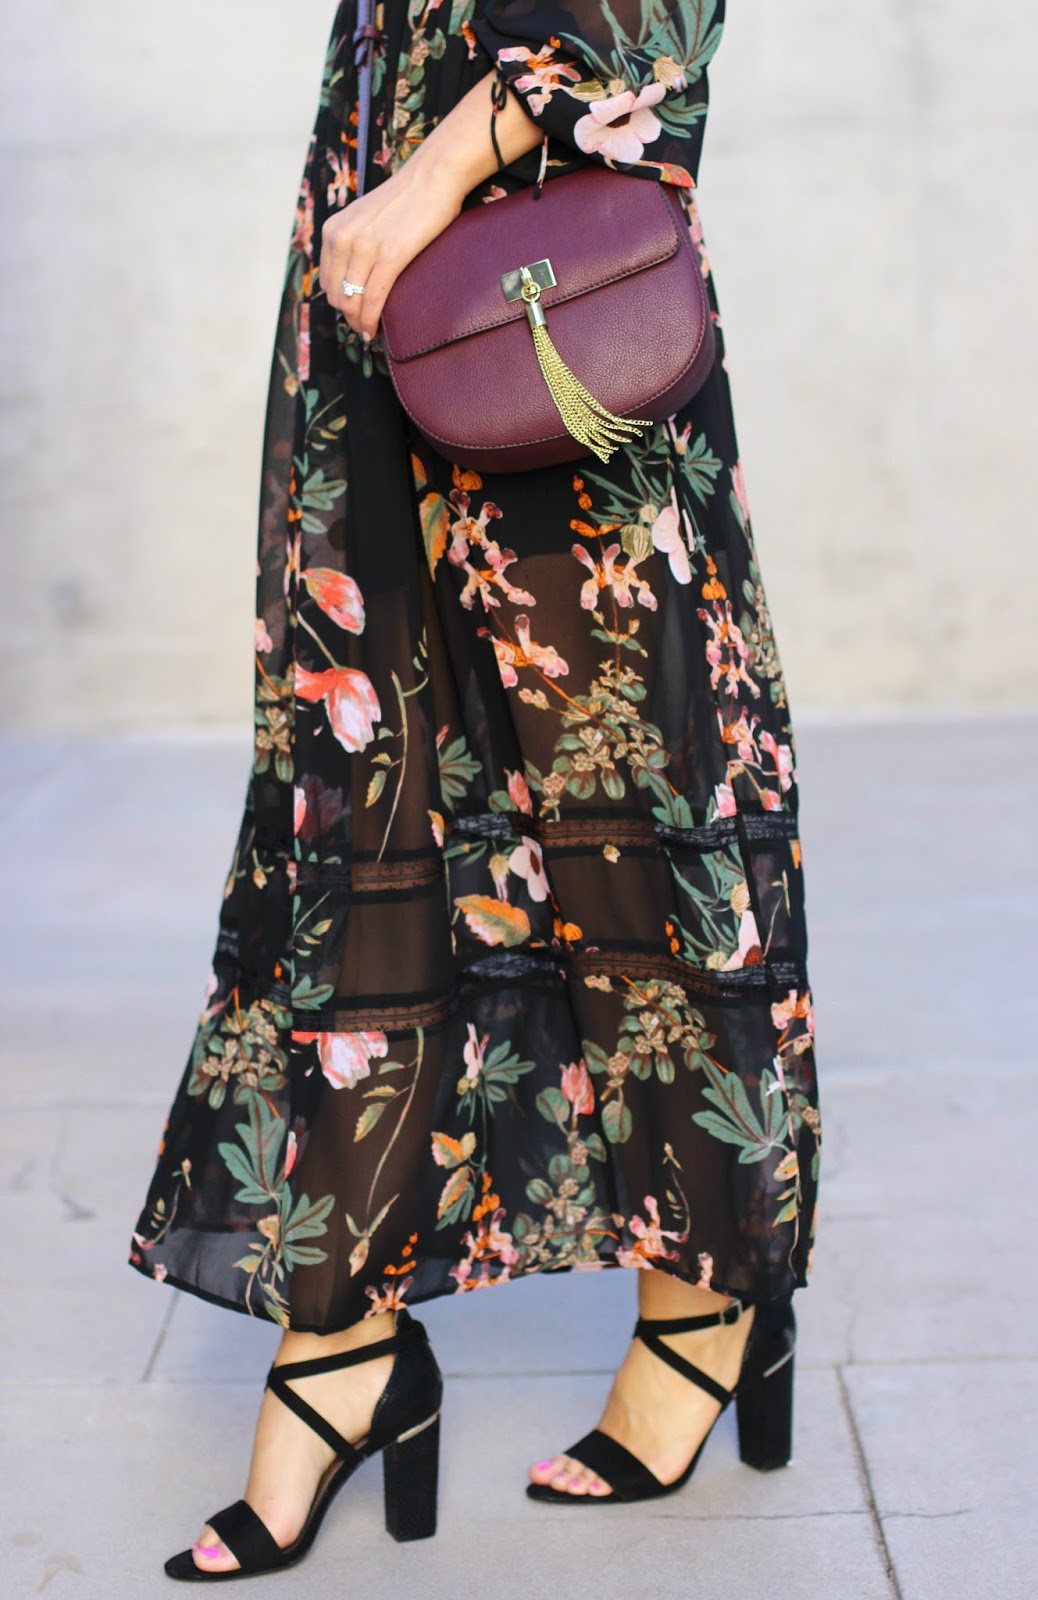 BELLE + SKY Floral Maxi Dress - Brie Bemis Rearick